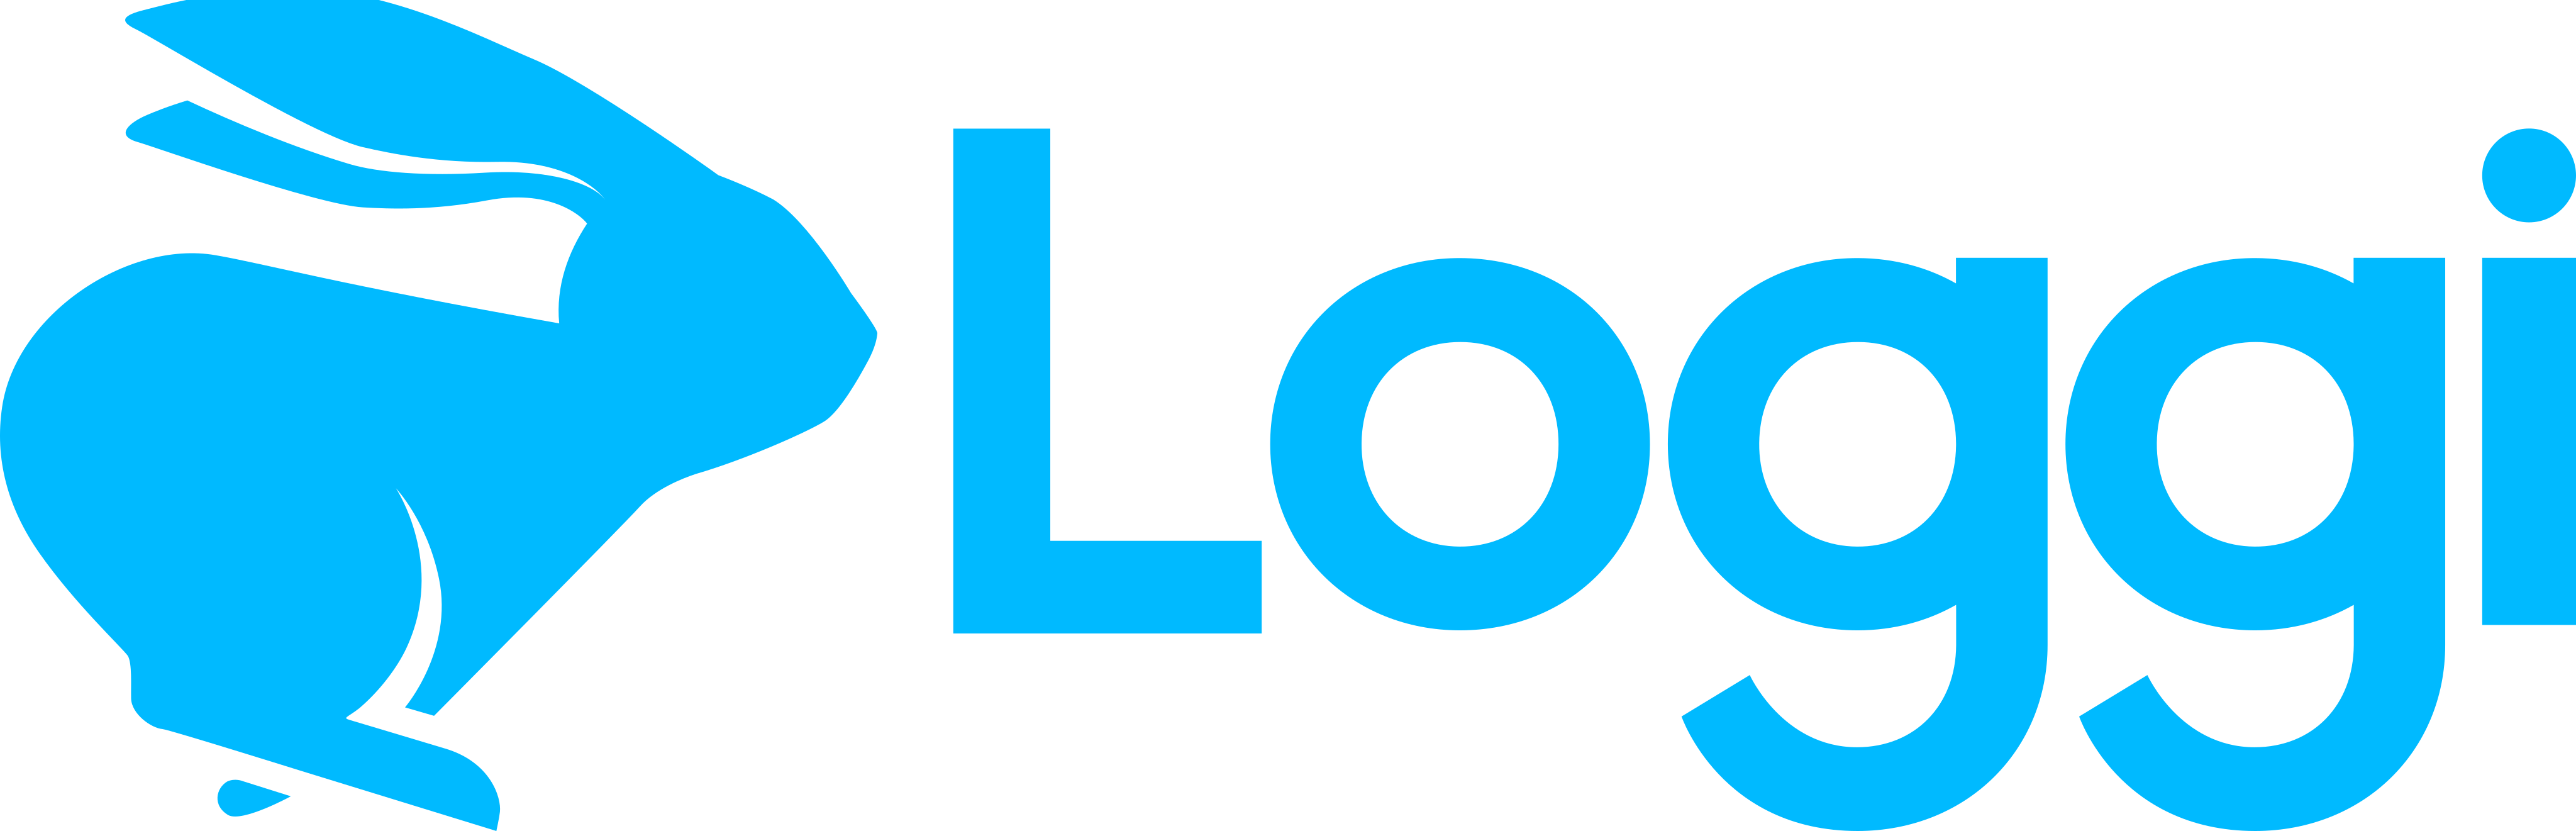 Loggi's logo